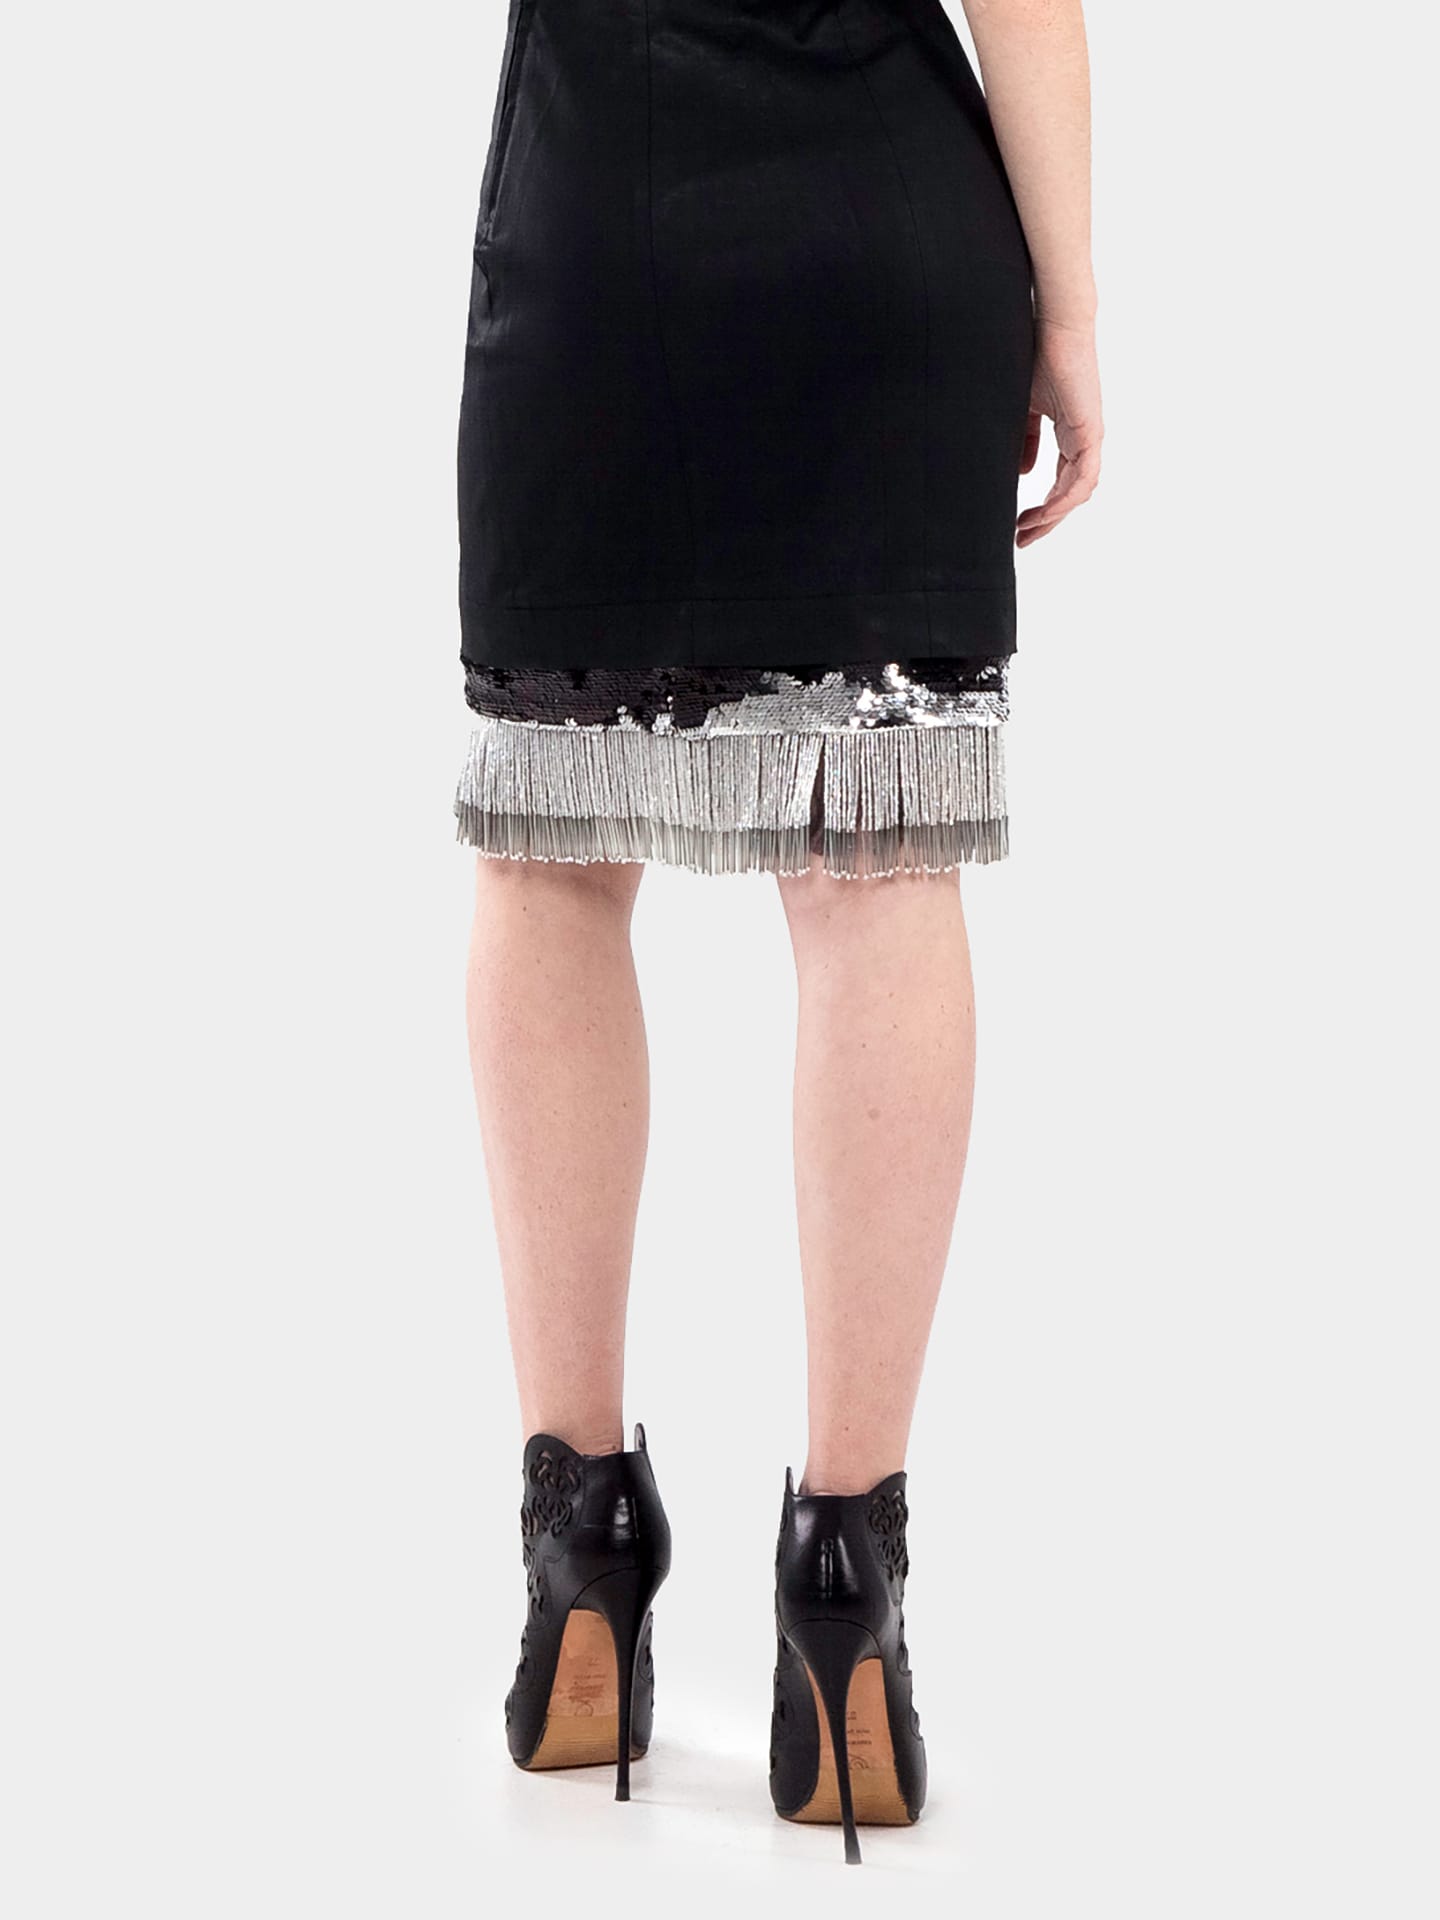 Labbys Gatsby Style Skirt